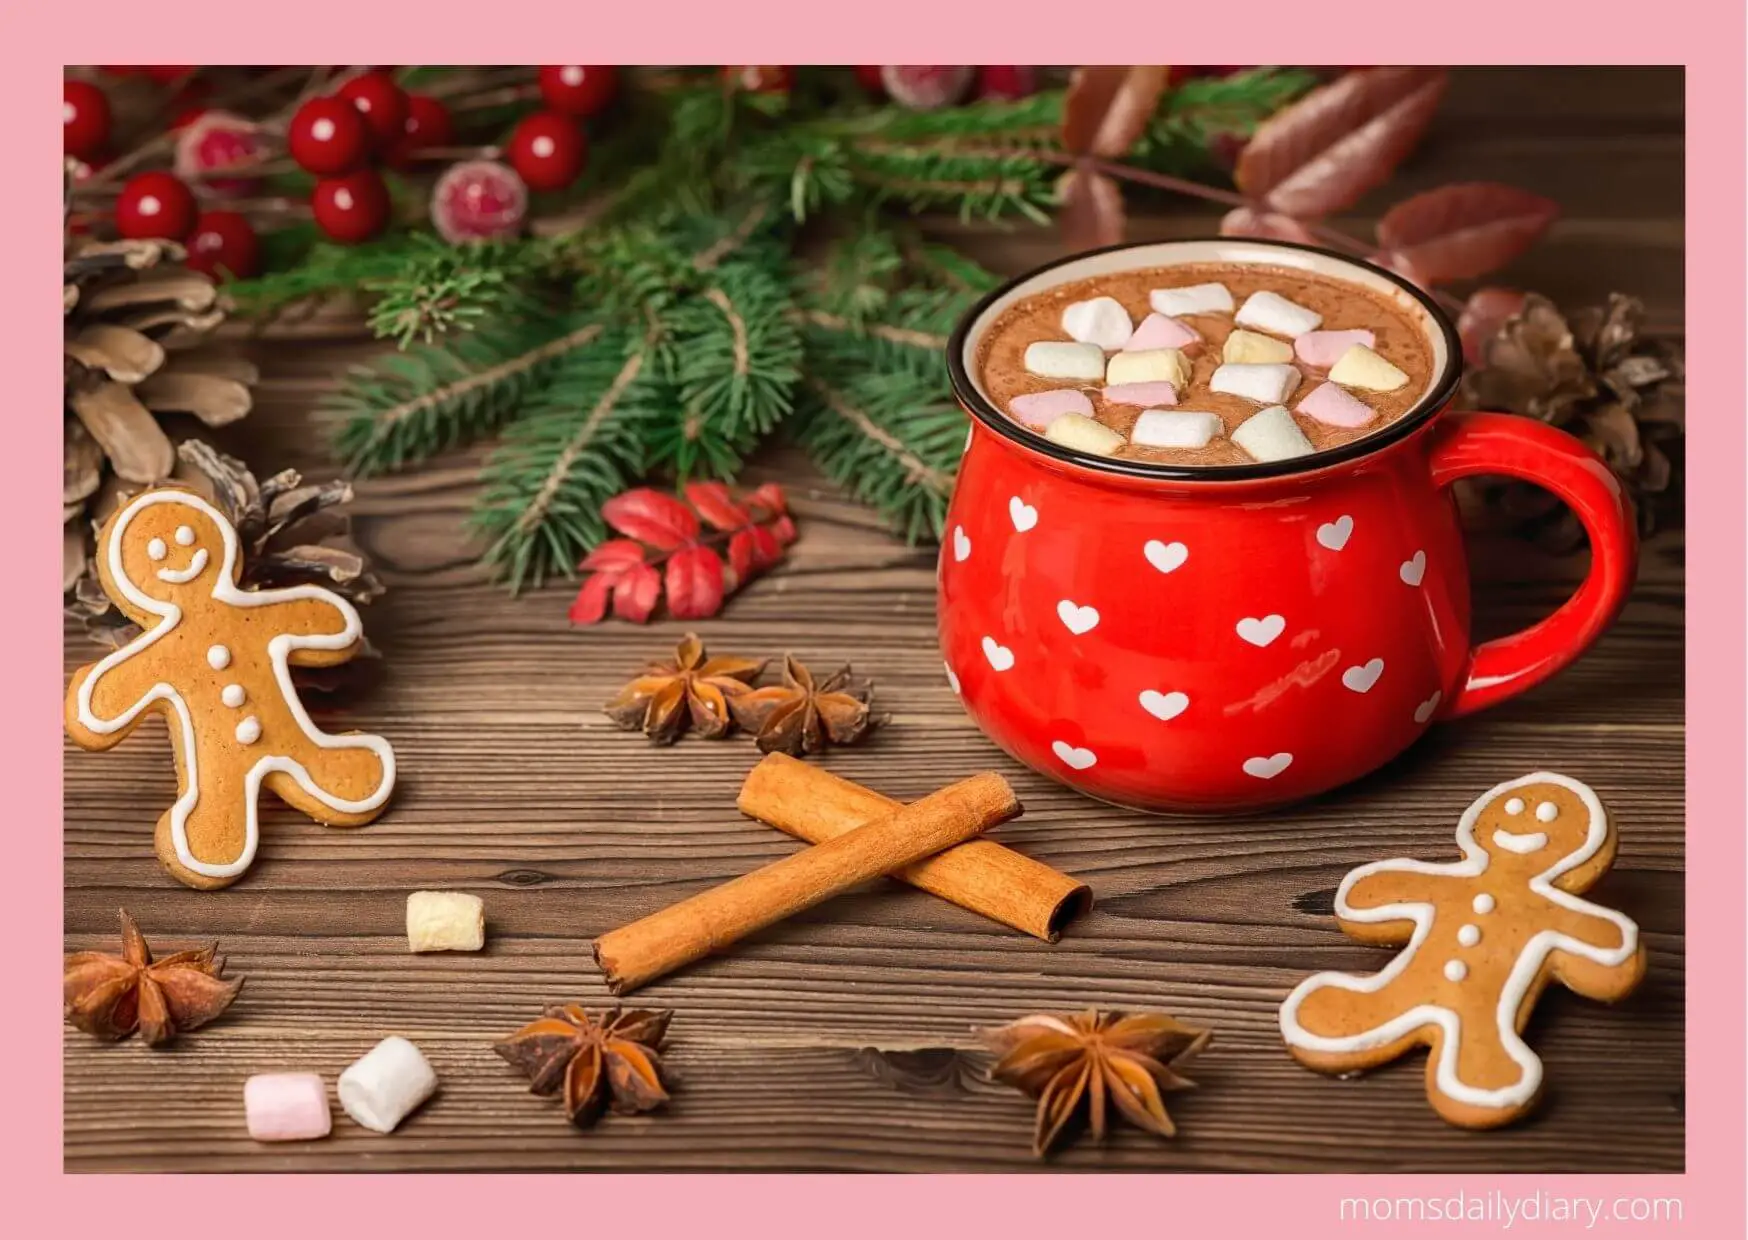 Winter activities: Drinking hot chocolate